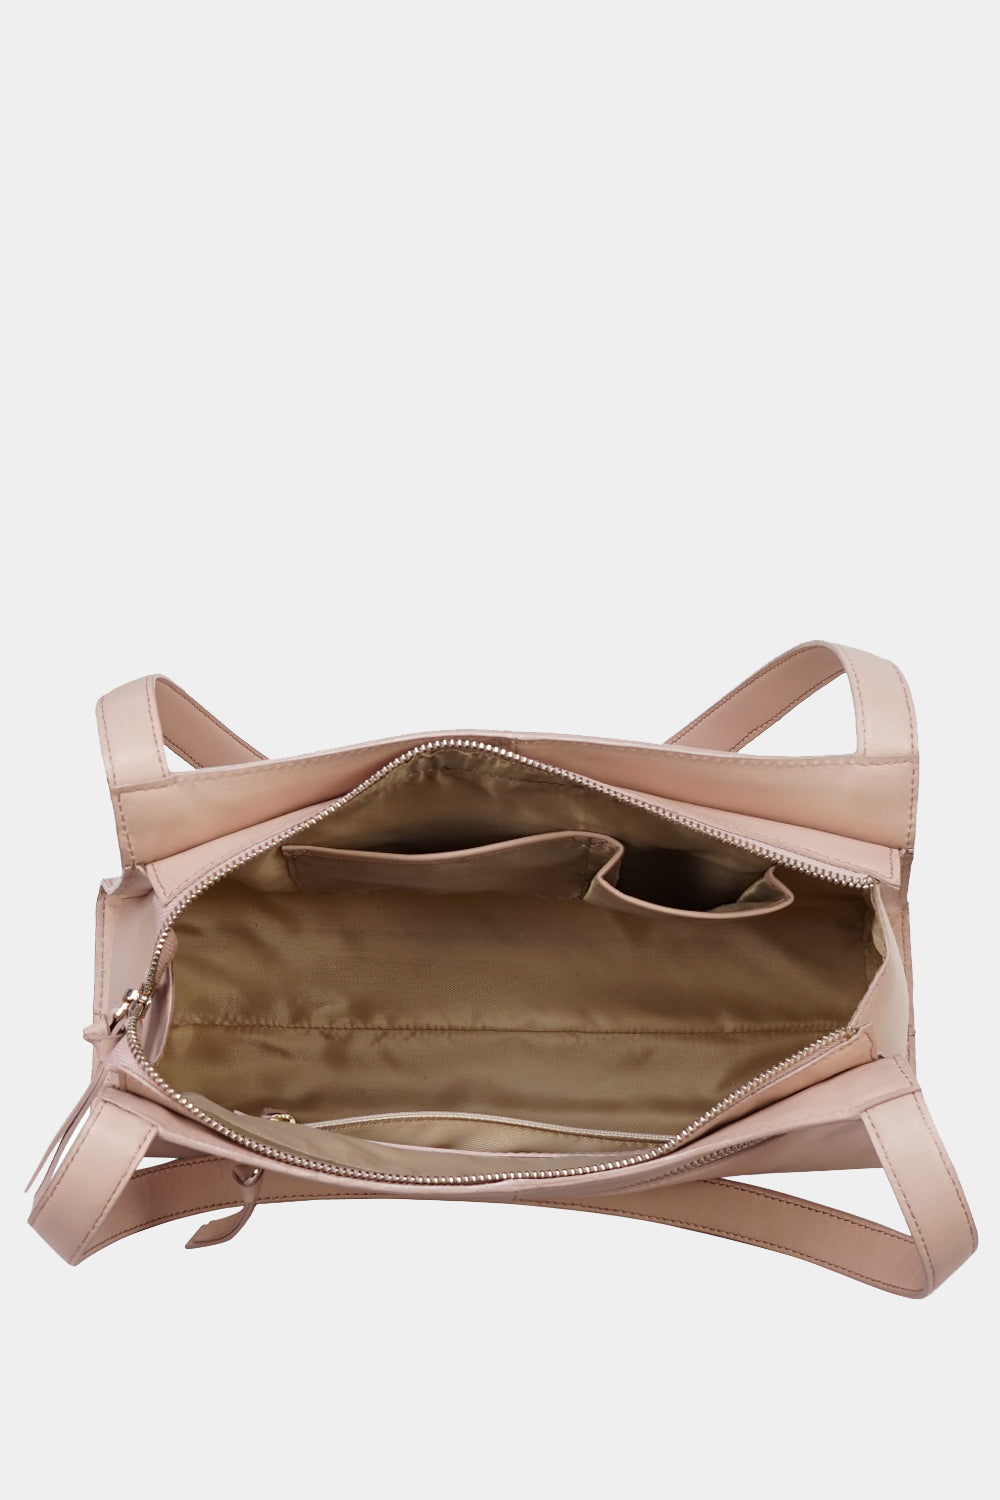 Justanned Structured Leather Handbag